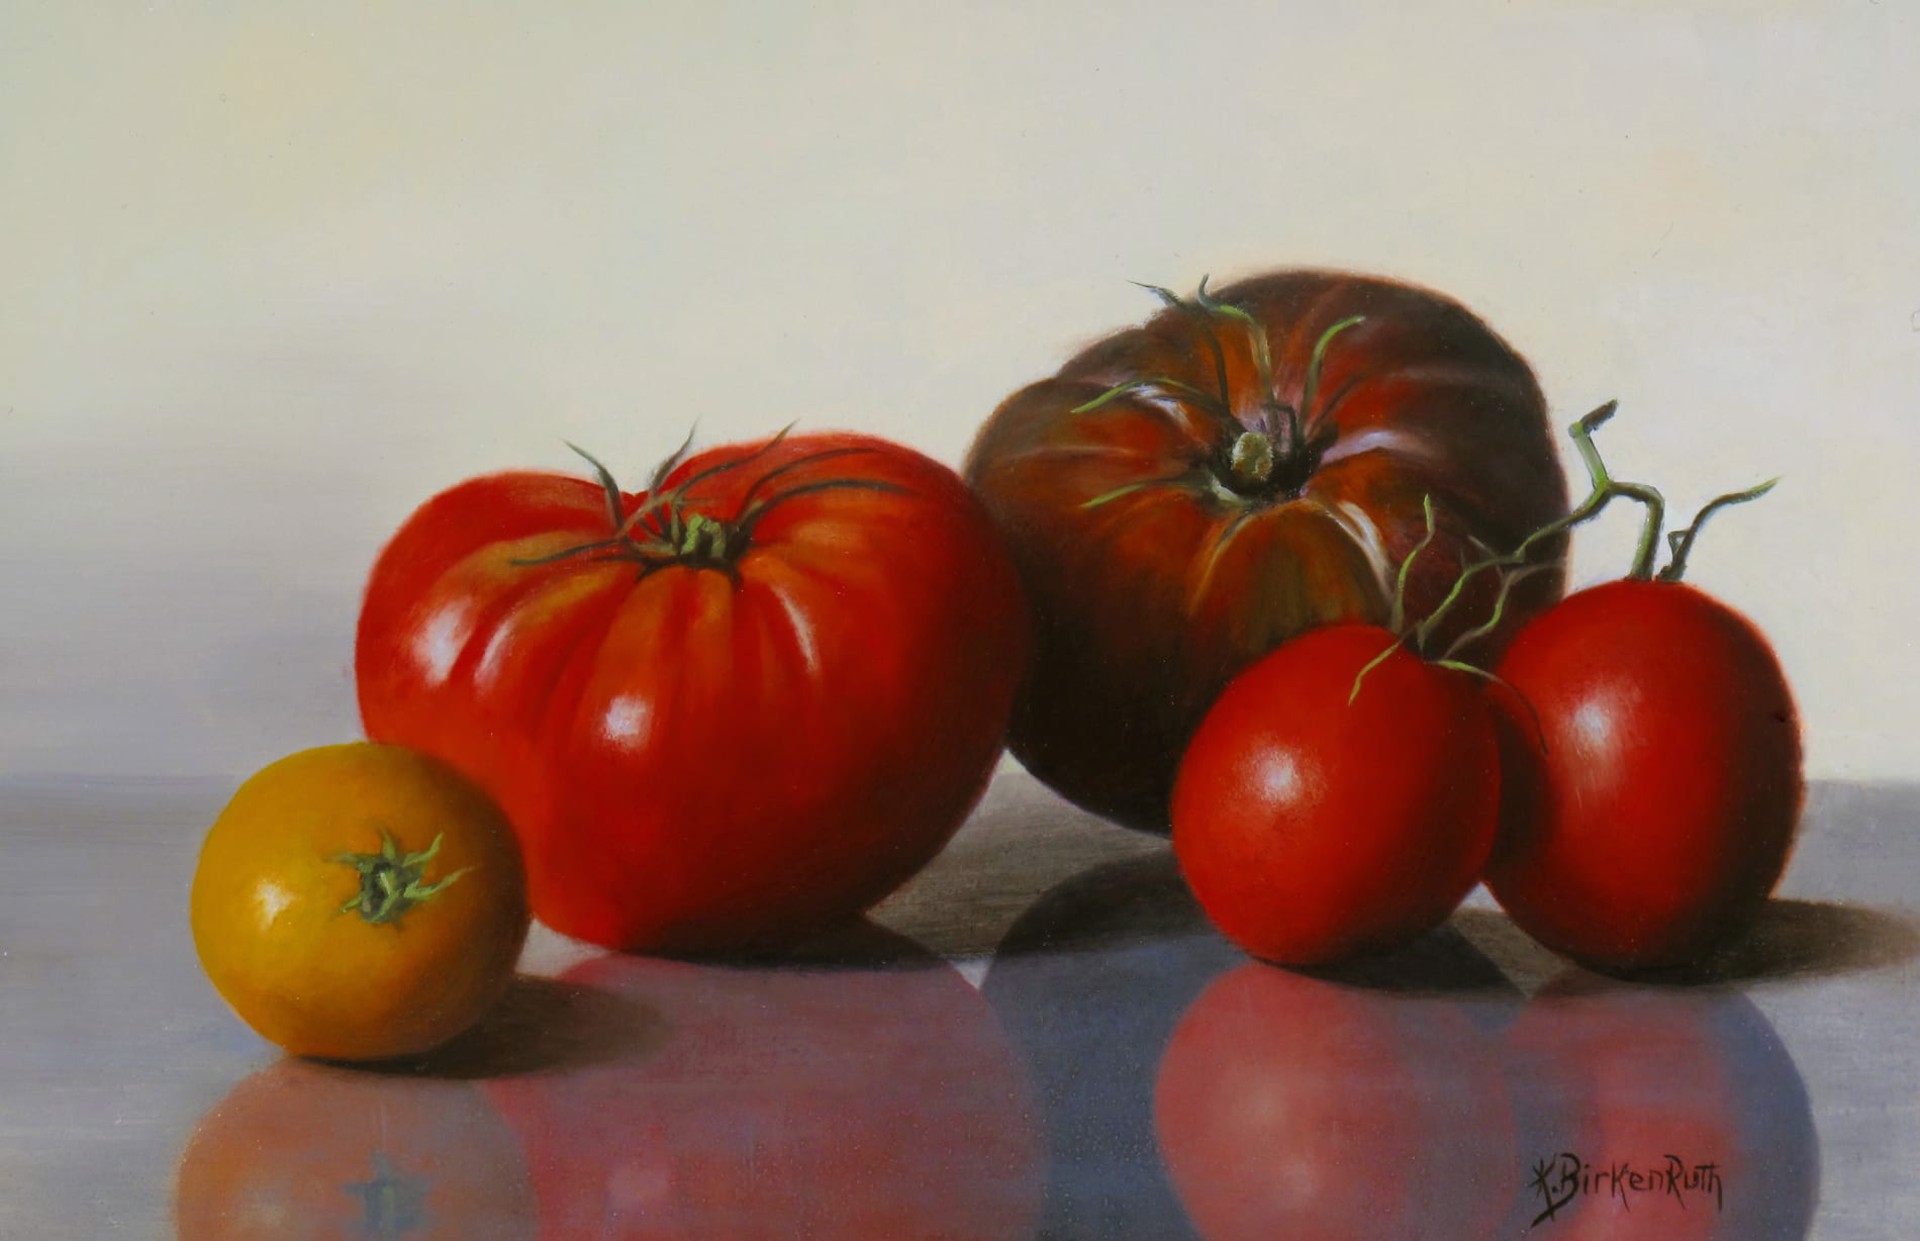 Tomato Varieties by Kelly Birkenruth